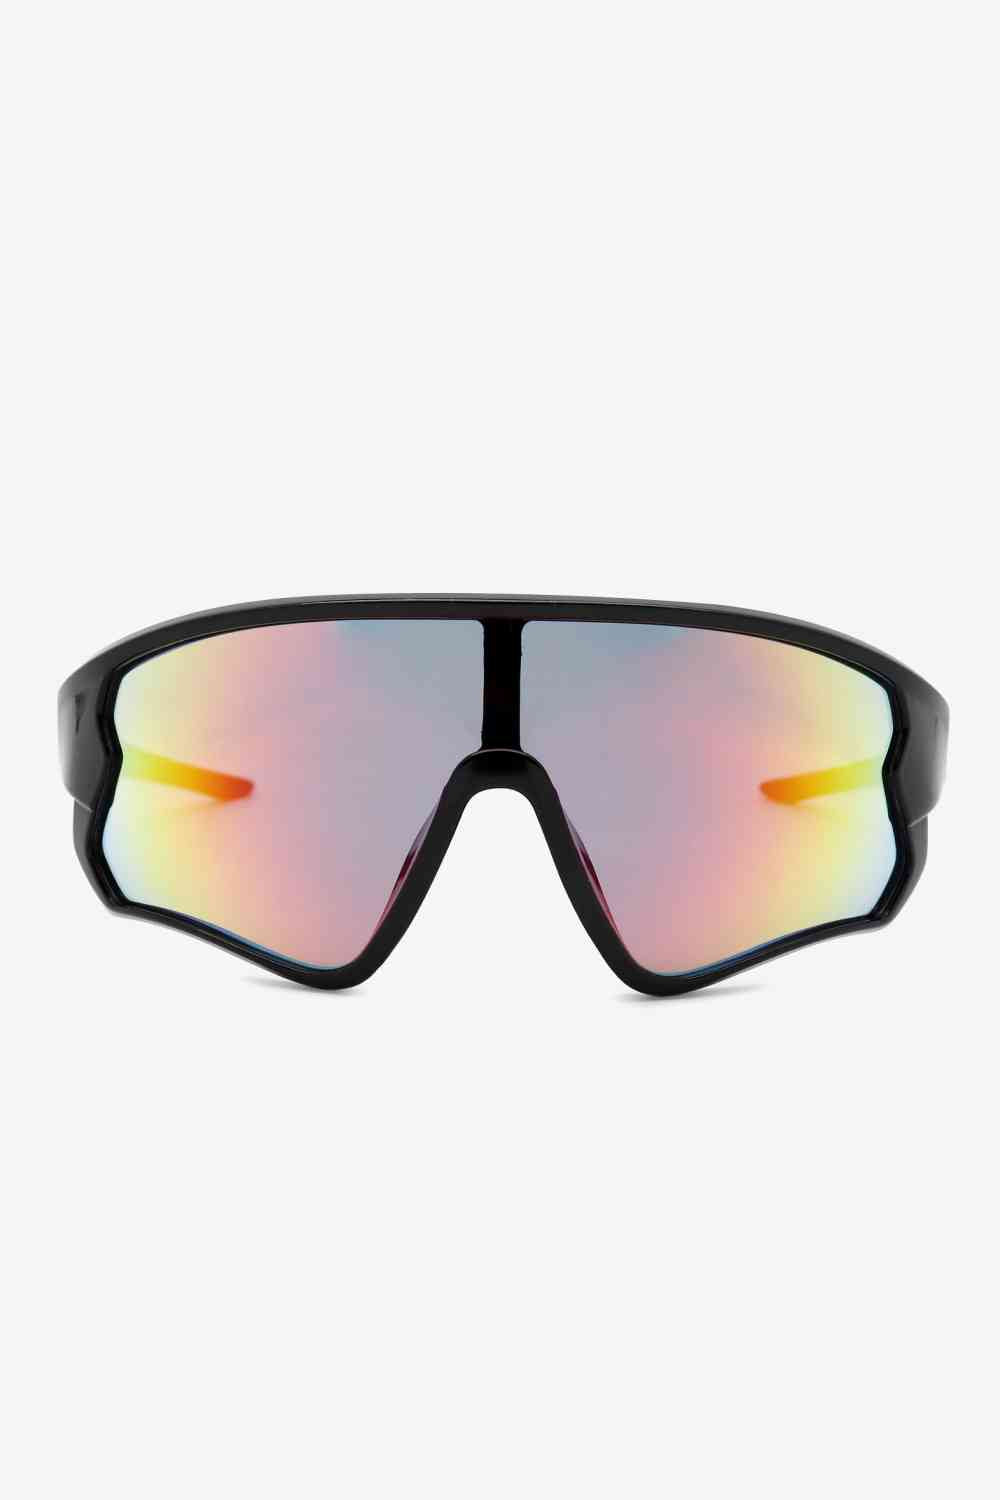 TEEK - Shade Shield Sunglasses EYEGLASSES TEEK Trend Red  